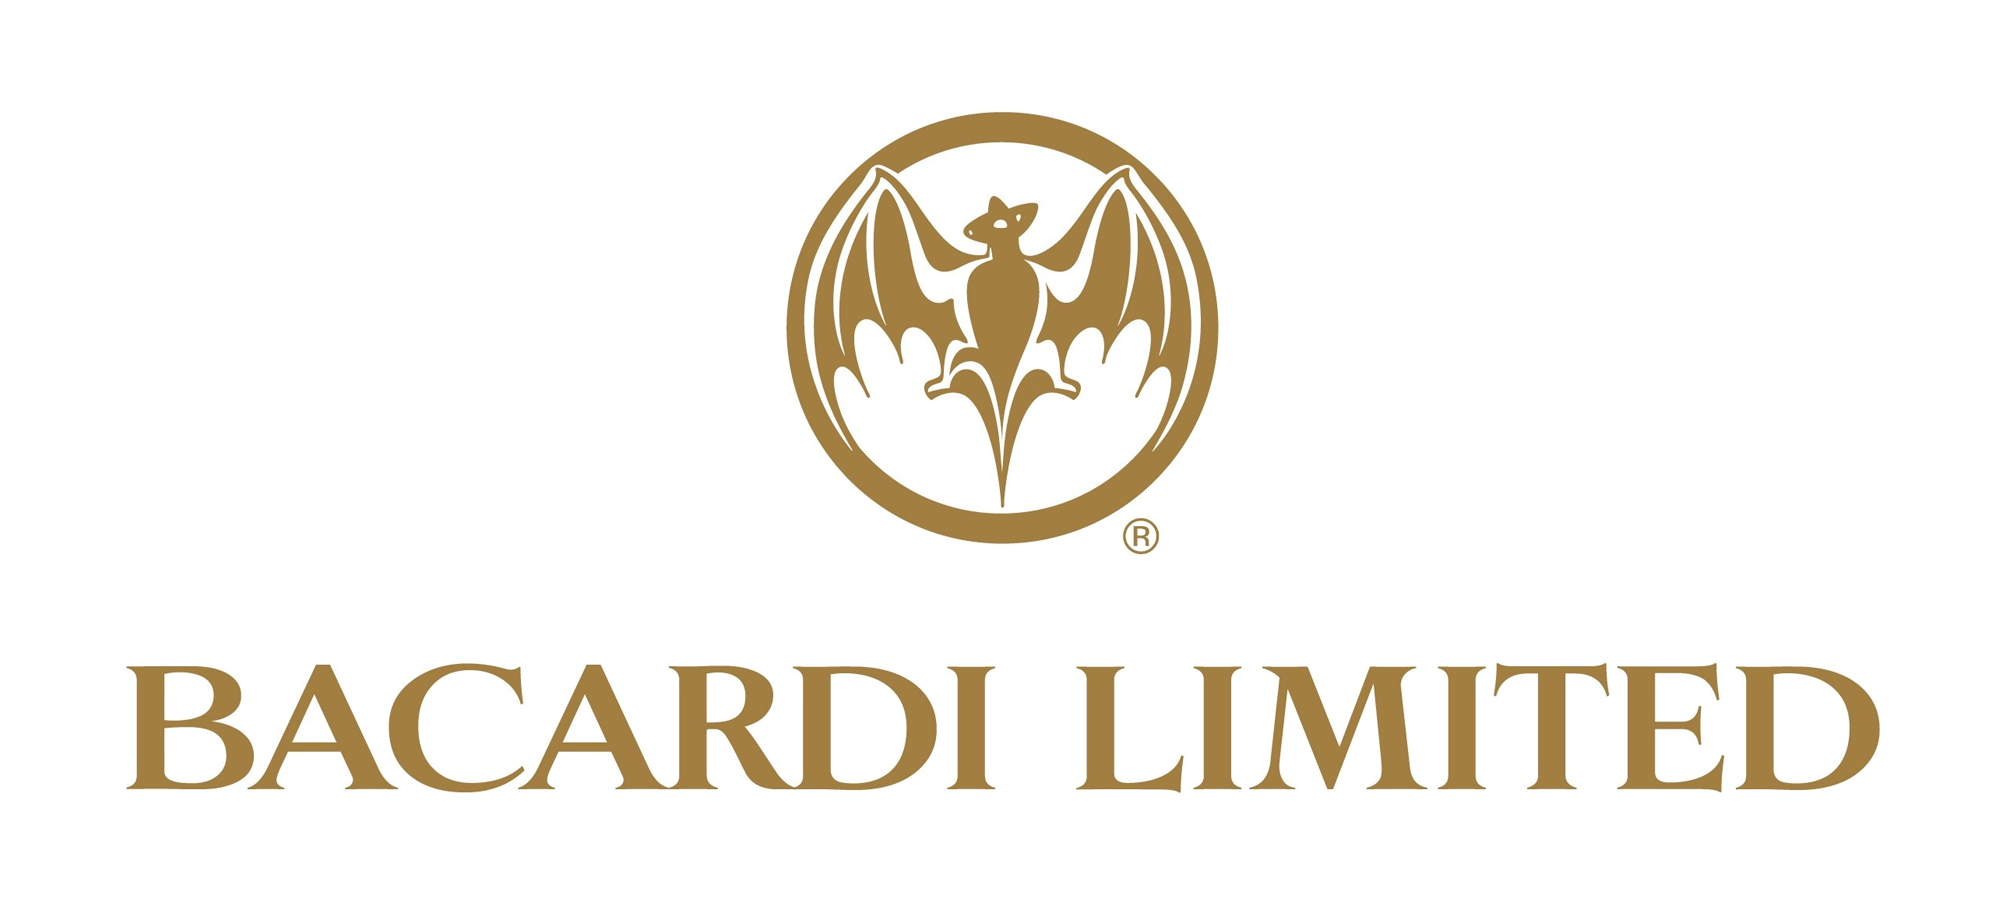 Bacardi Limited Logo PNG - 115517